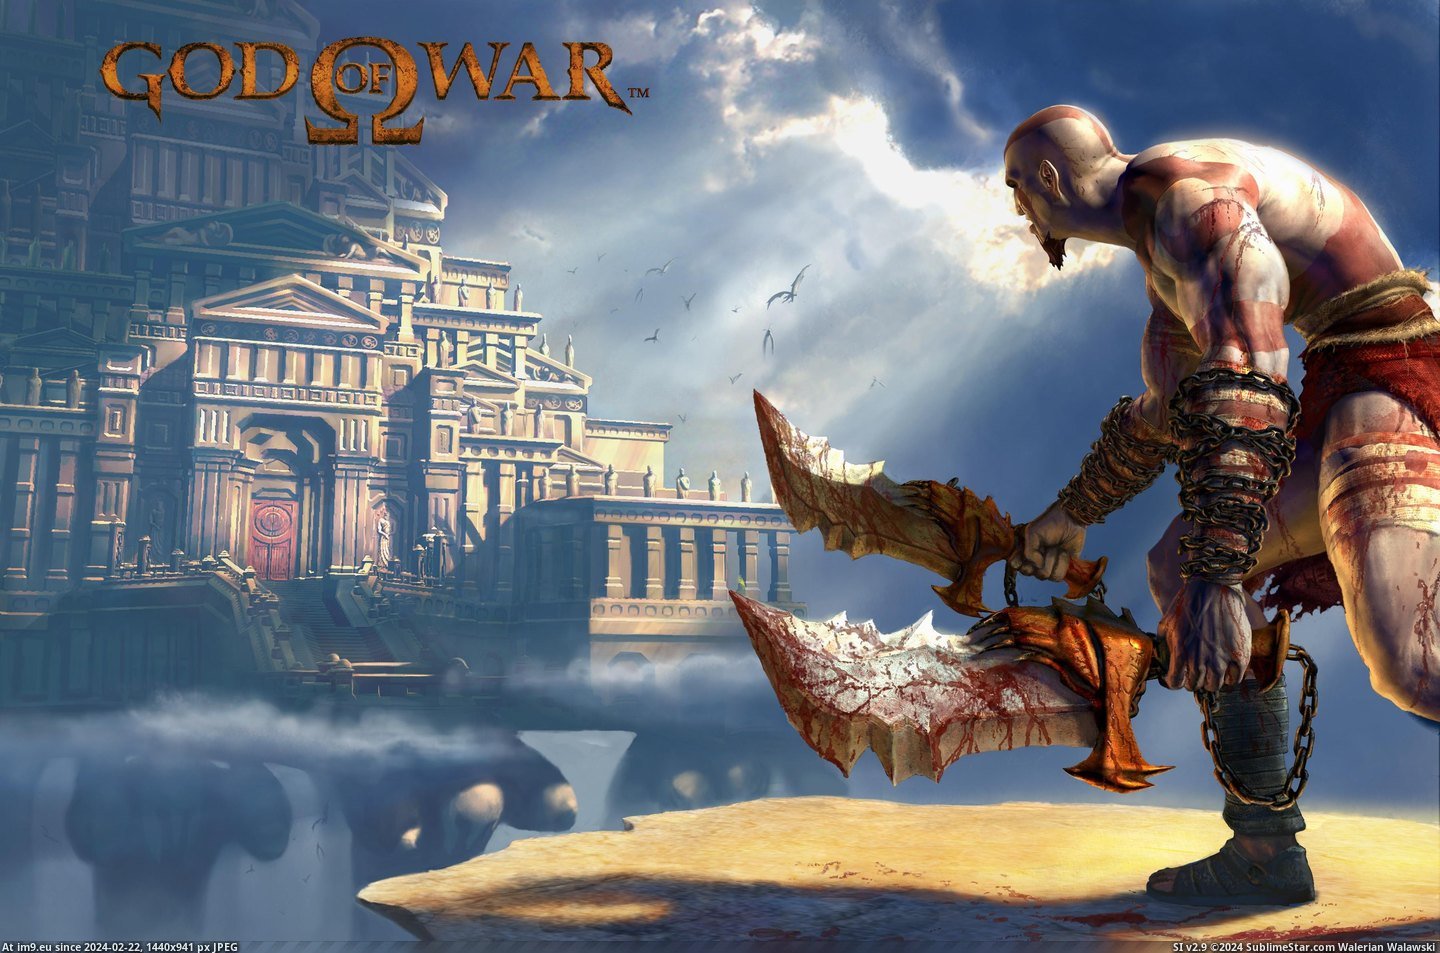 #Game #War #God #Video Video Game God Of War 2898 Pic. (Obraz z album Games Wallpapers))